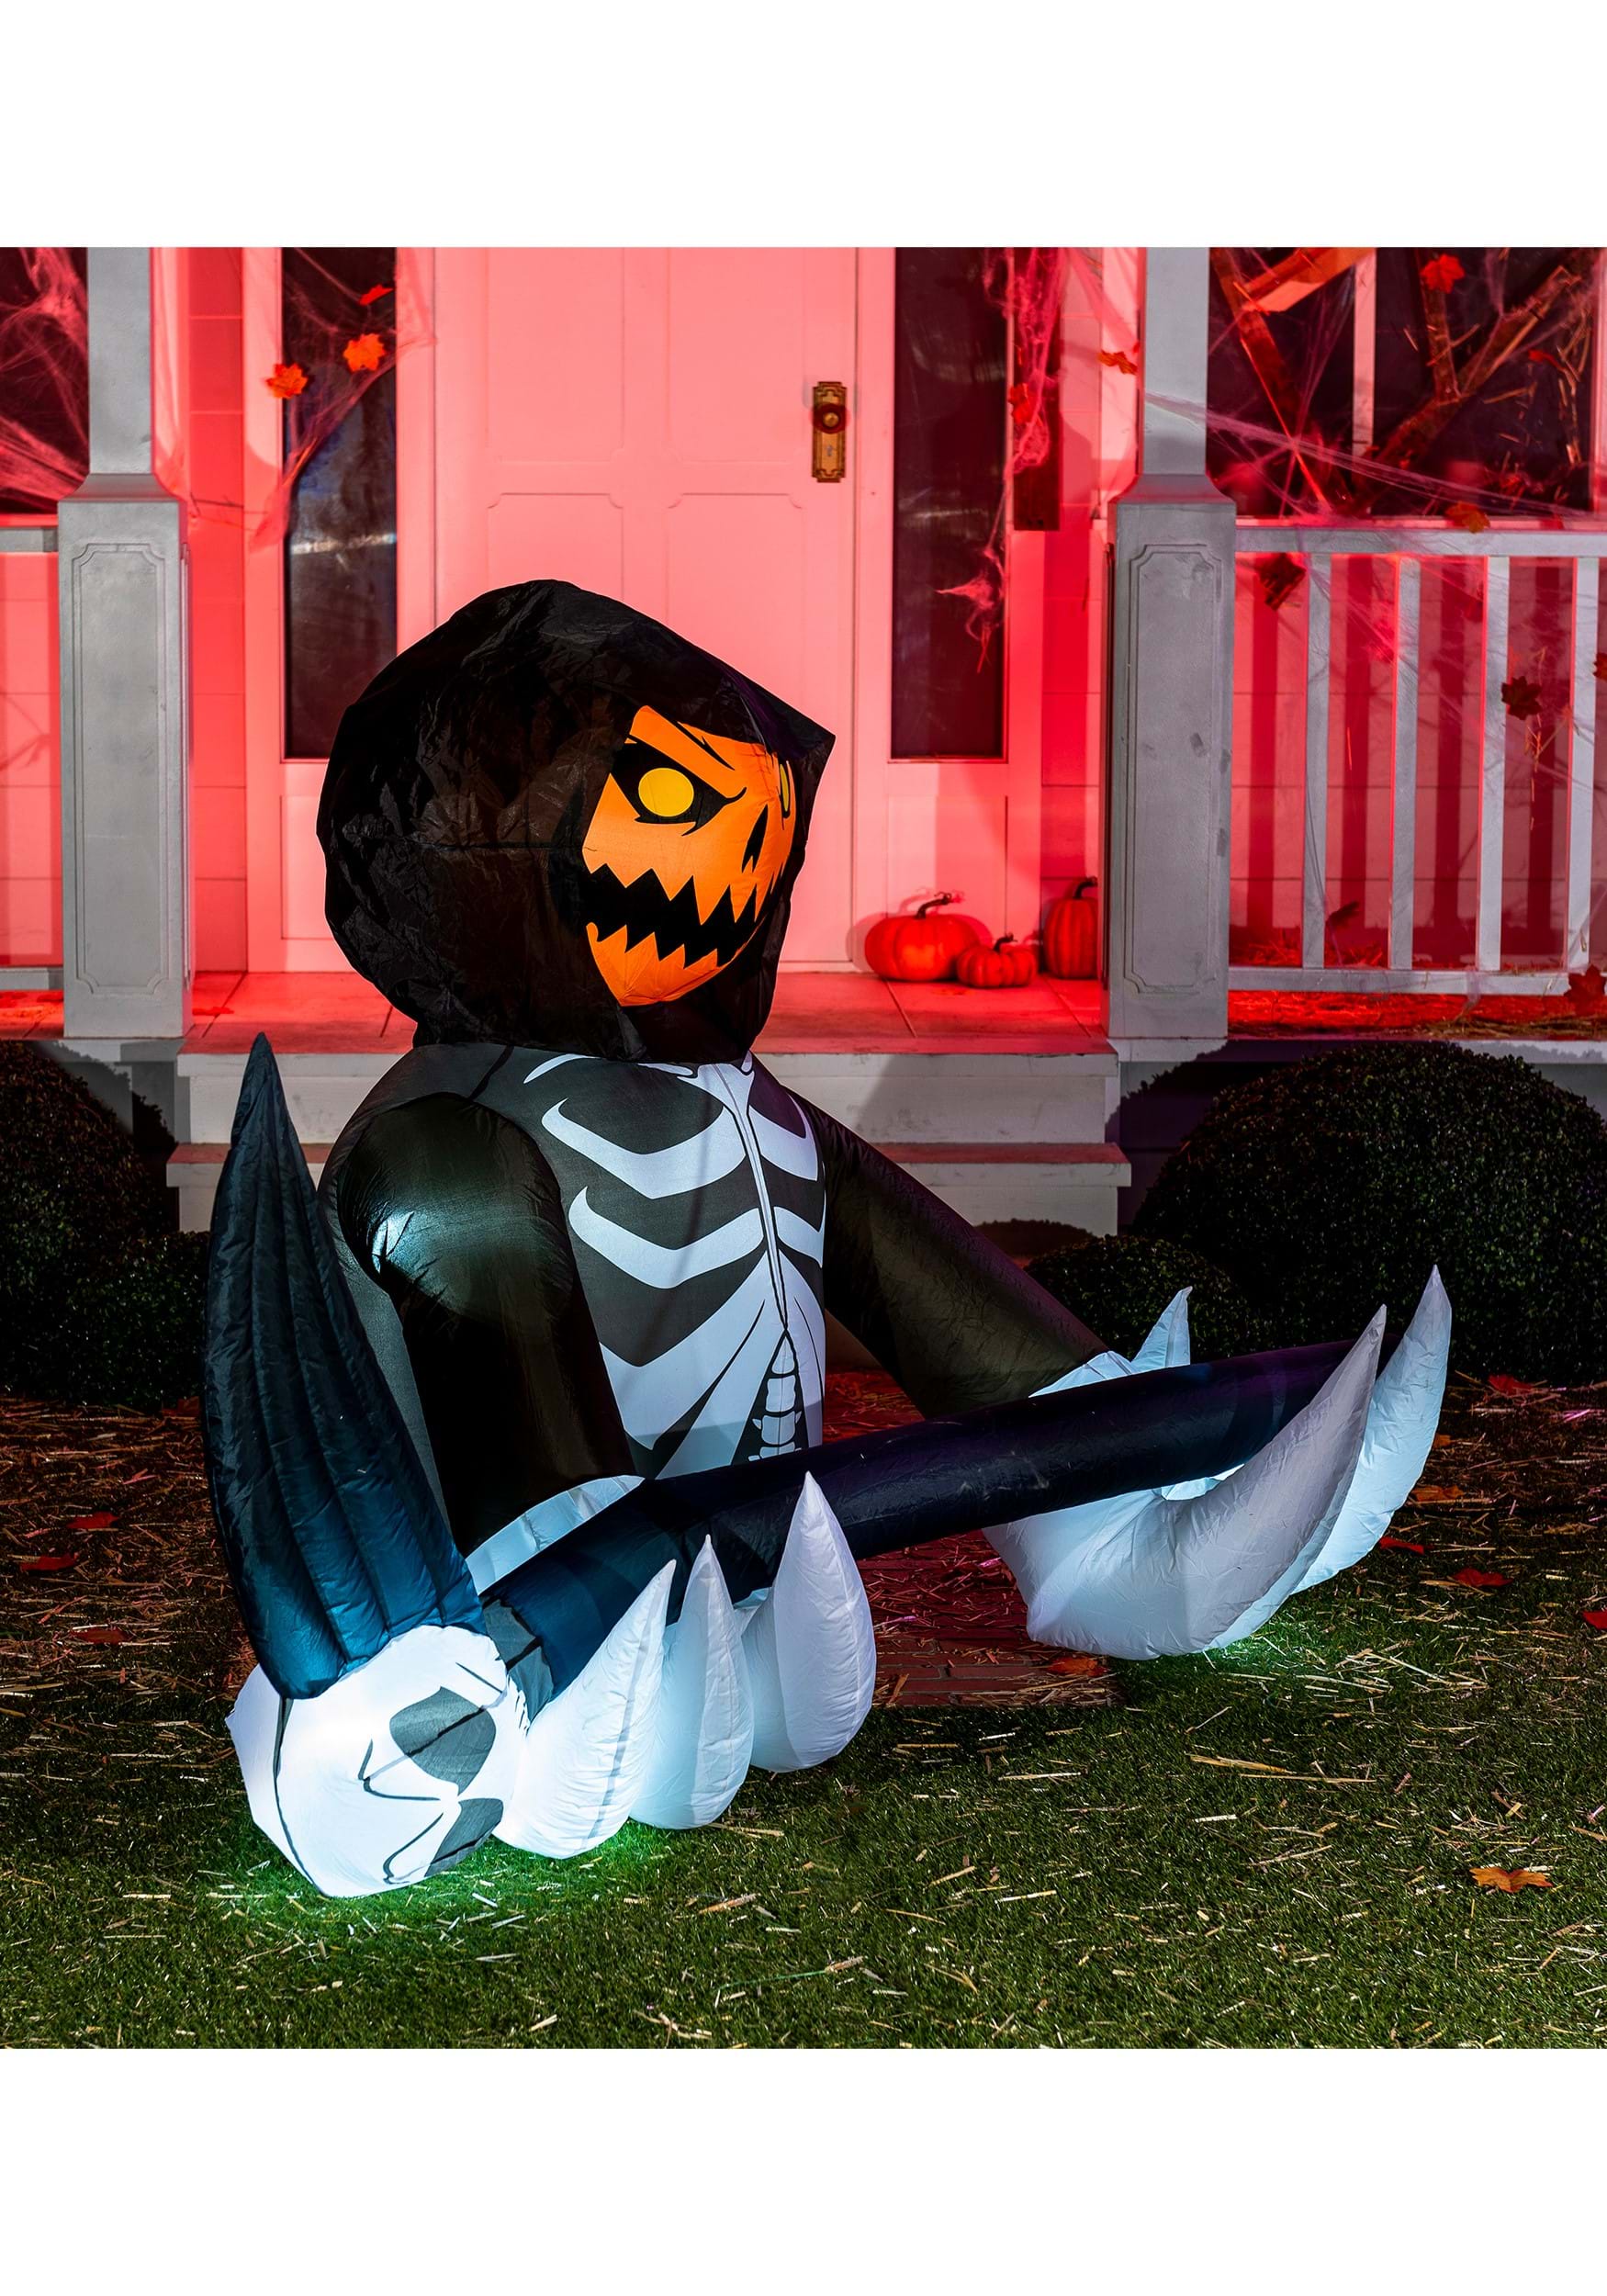 4 Foot Pumpkin Reaper Inflatable Decoration